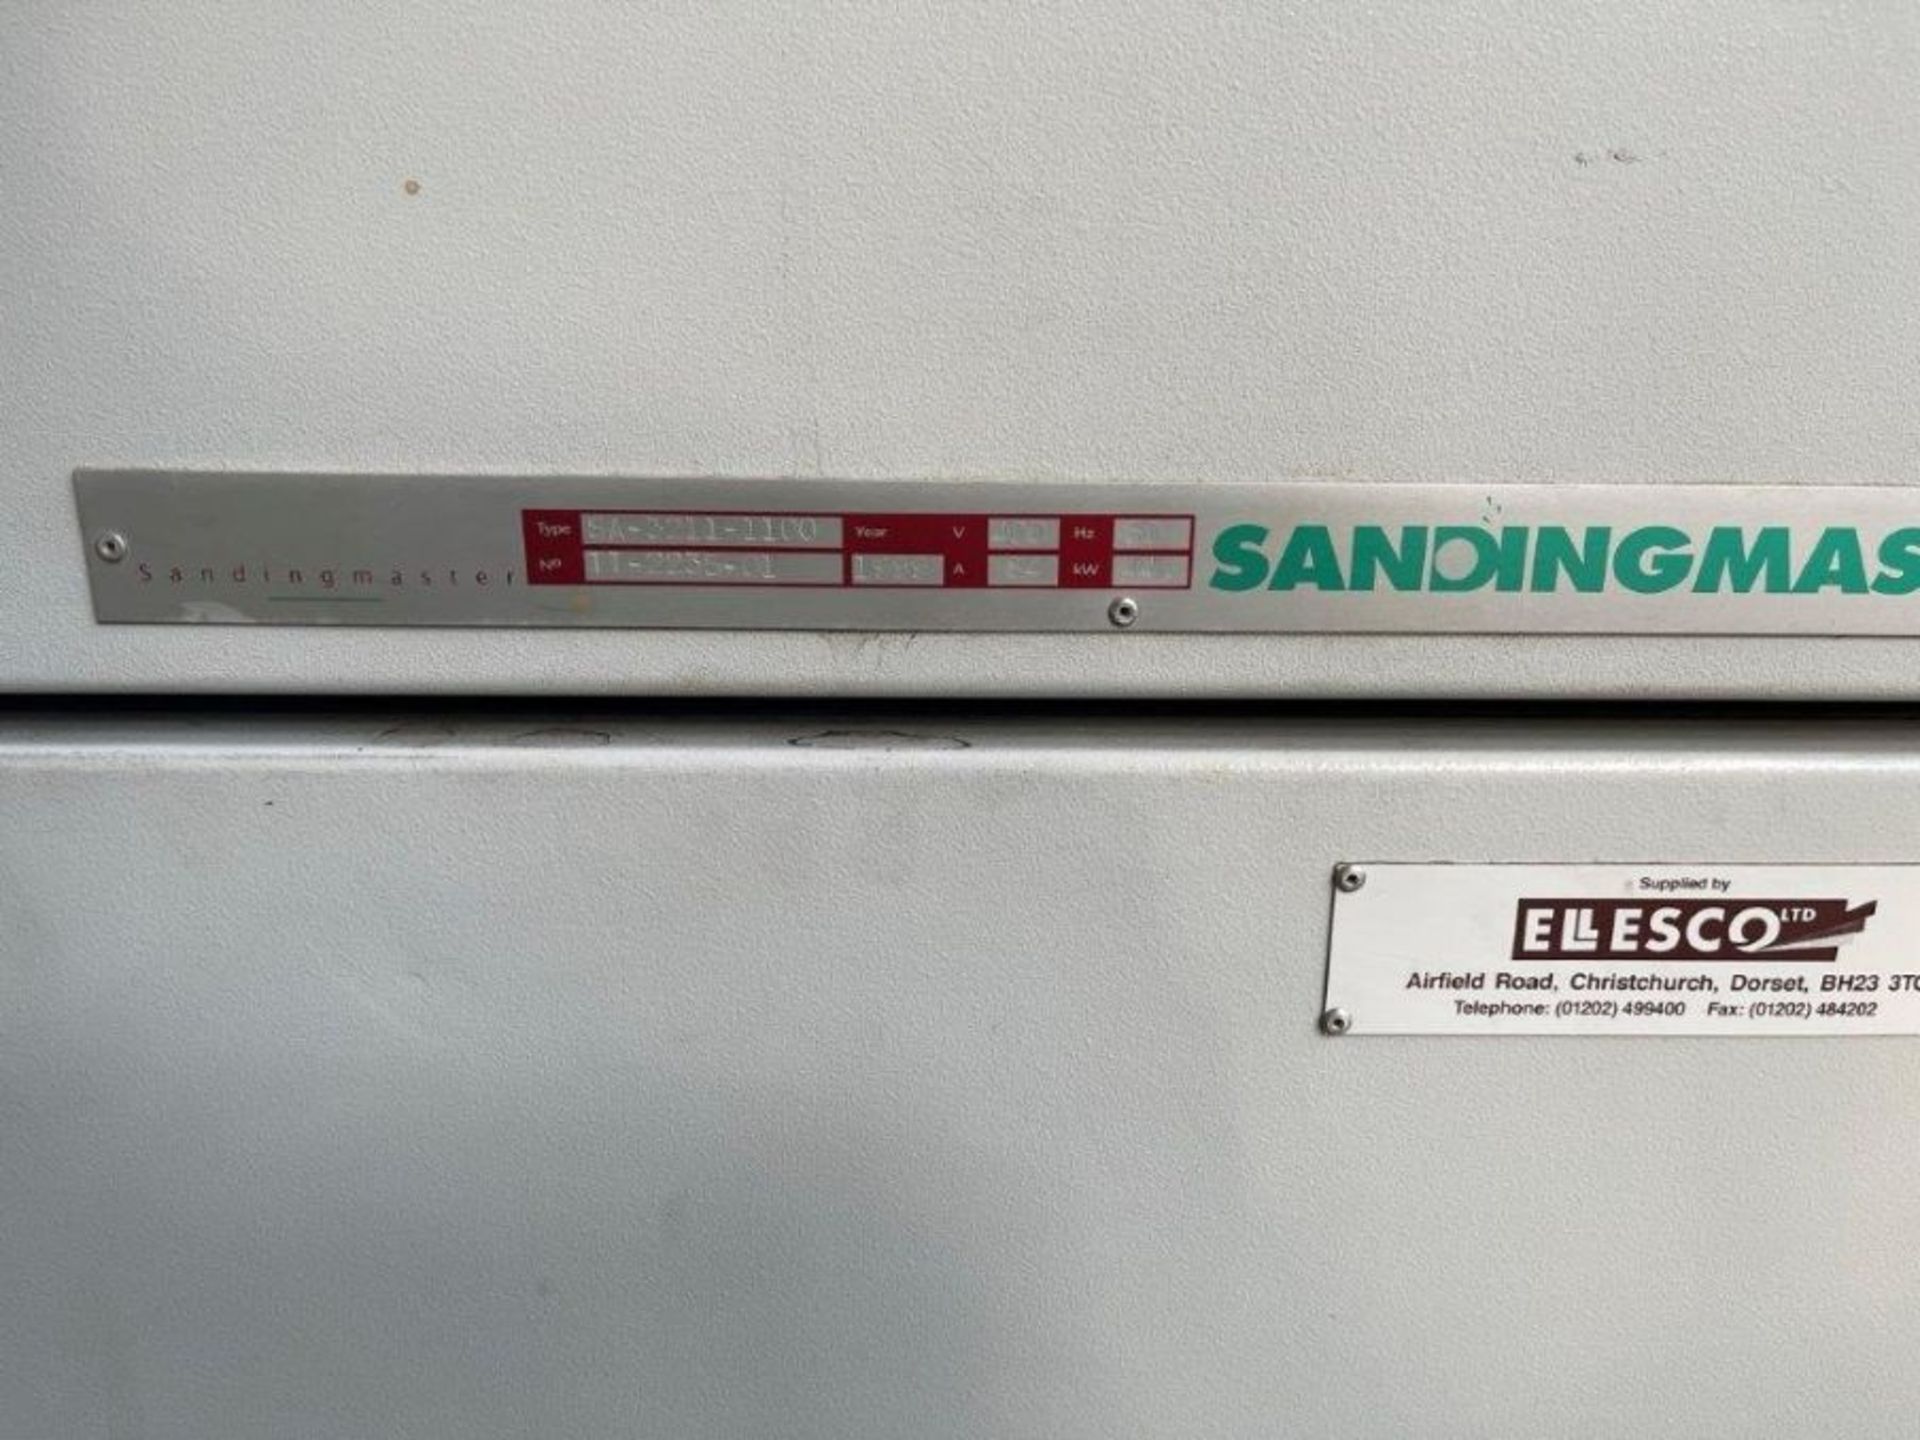 Sanding Master TT 2235-01 Calibrating Sander Bottom, Serial No. SA-3211-1100, Year of Manufacture - Image 10 of 10